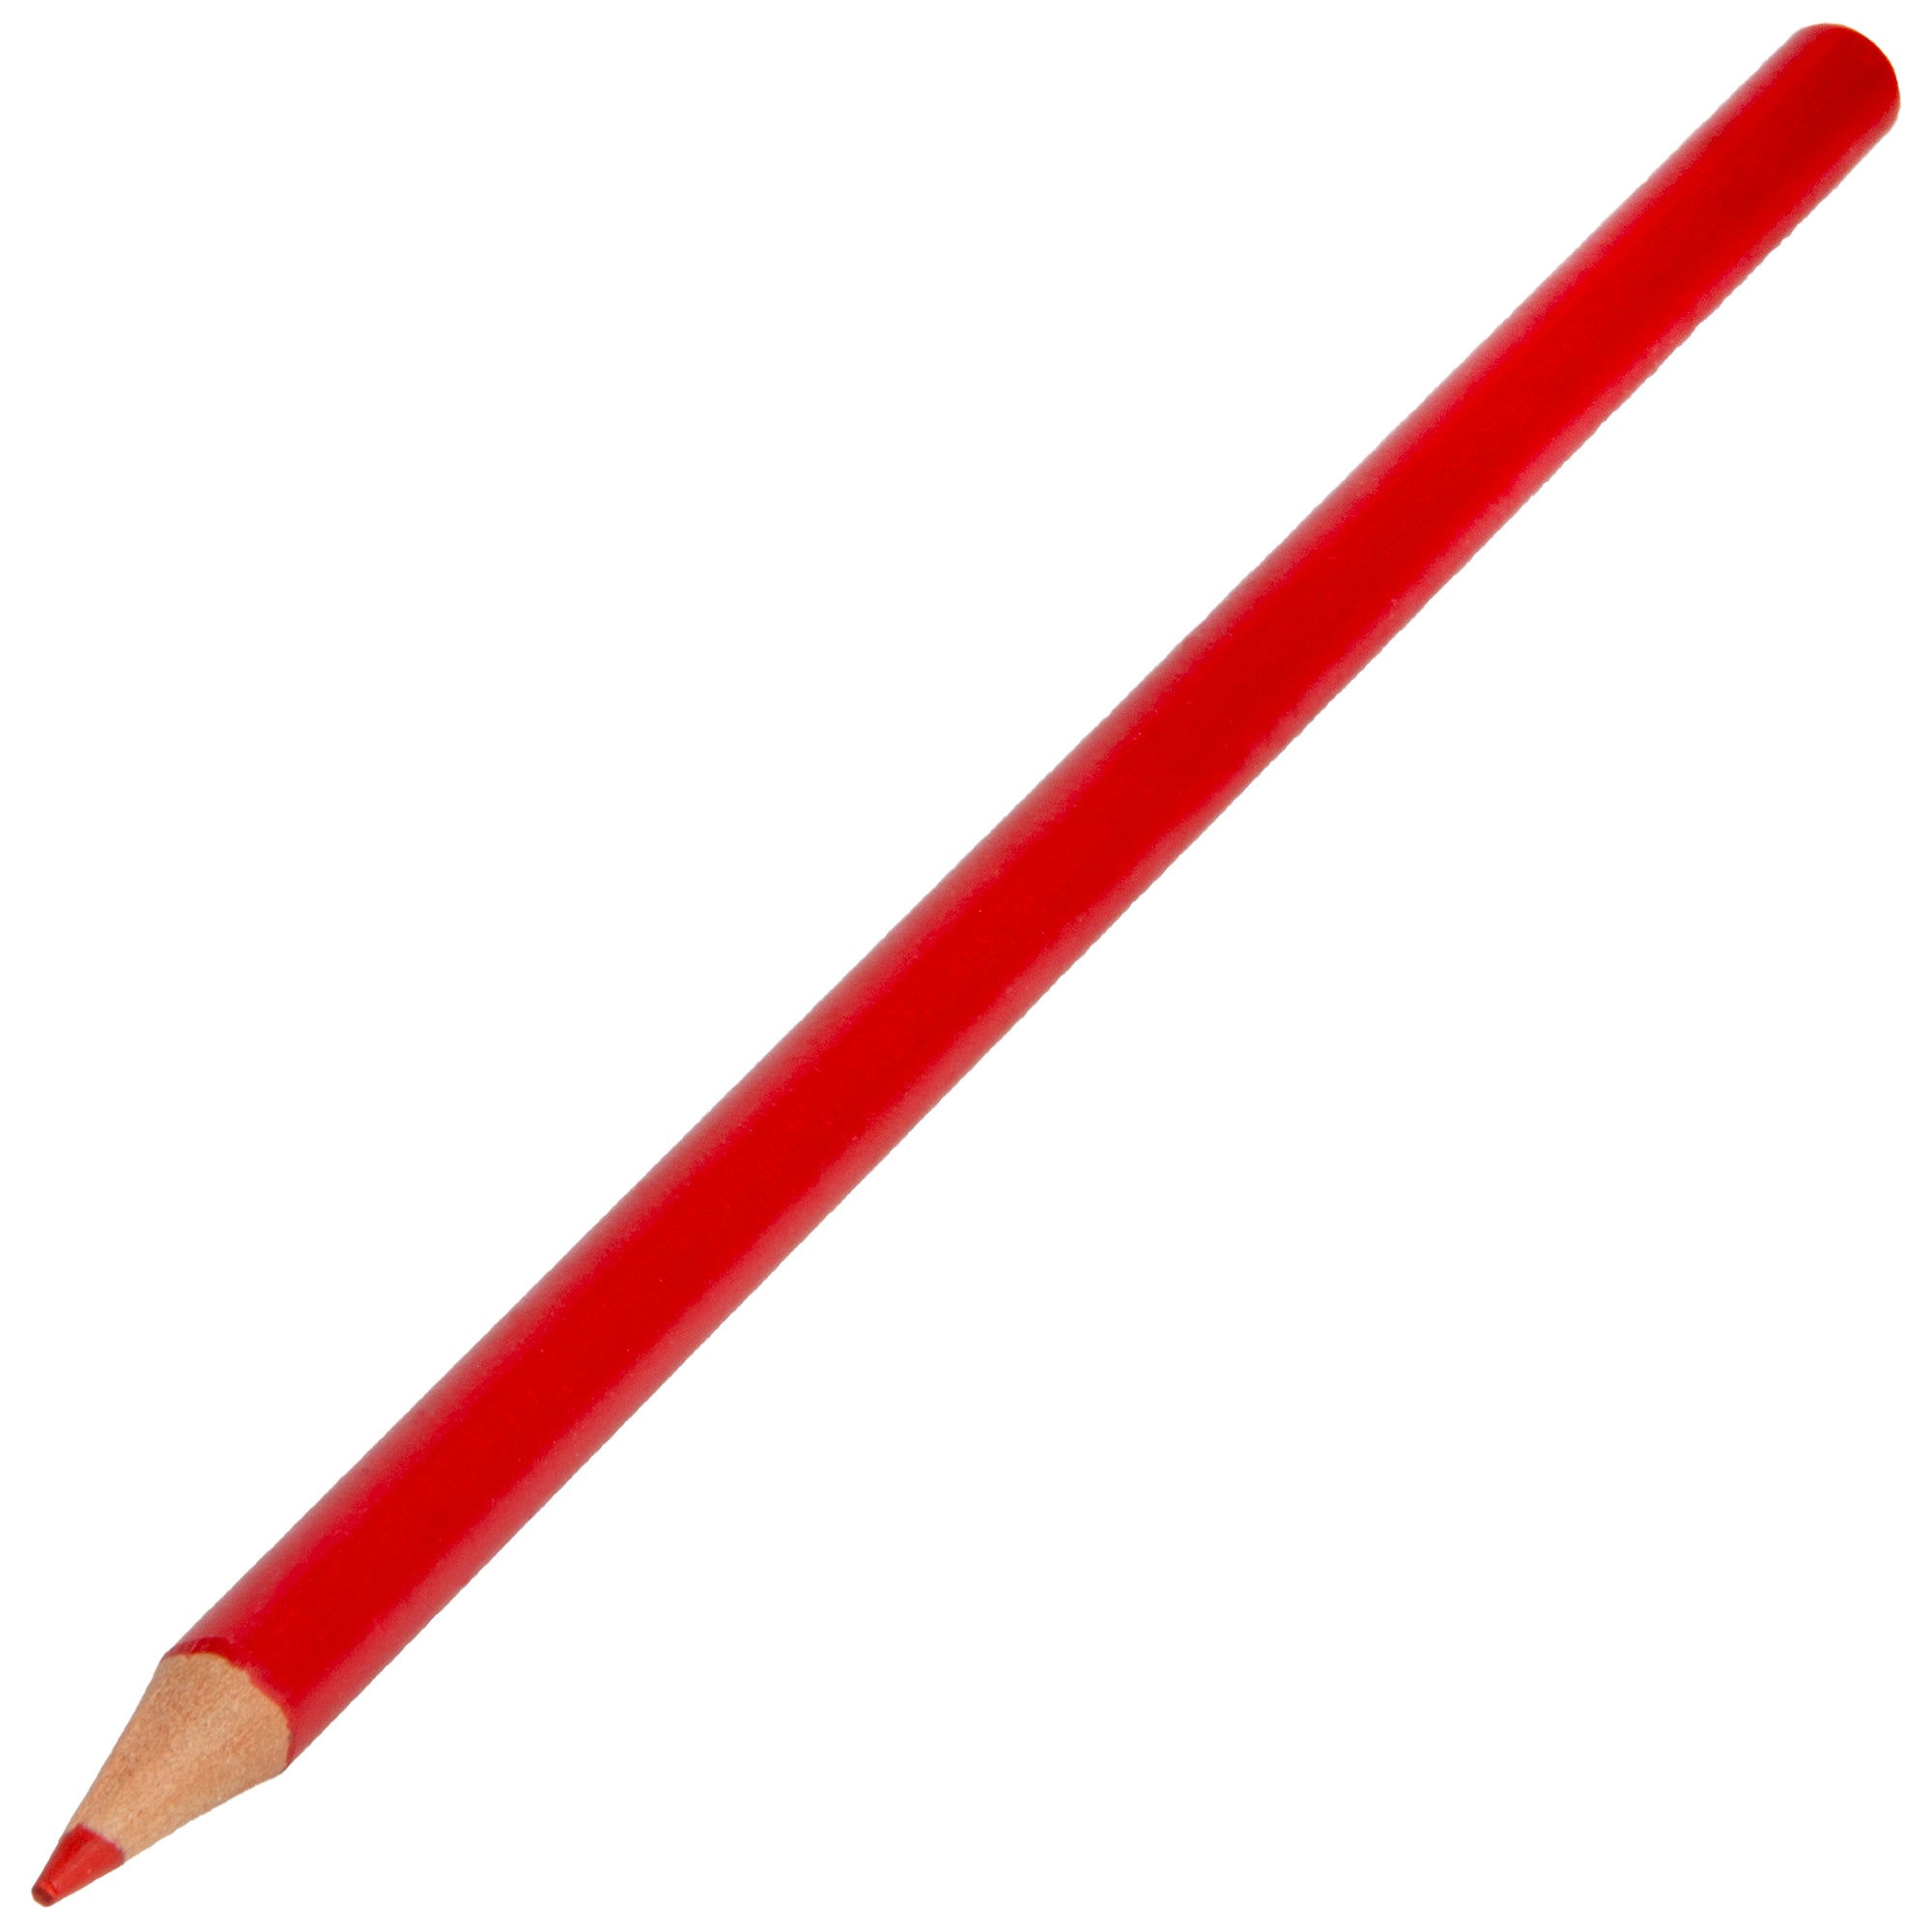 10 Pack Of Colored Pencils( 1 Case=100Pcs) 0.882$/PC